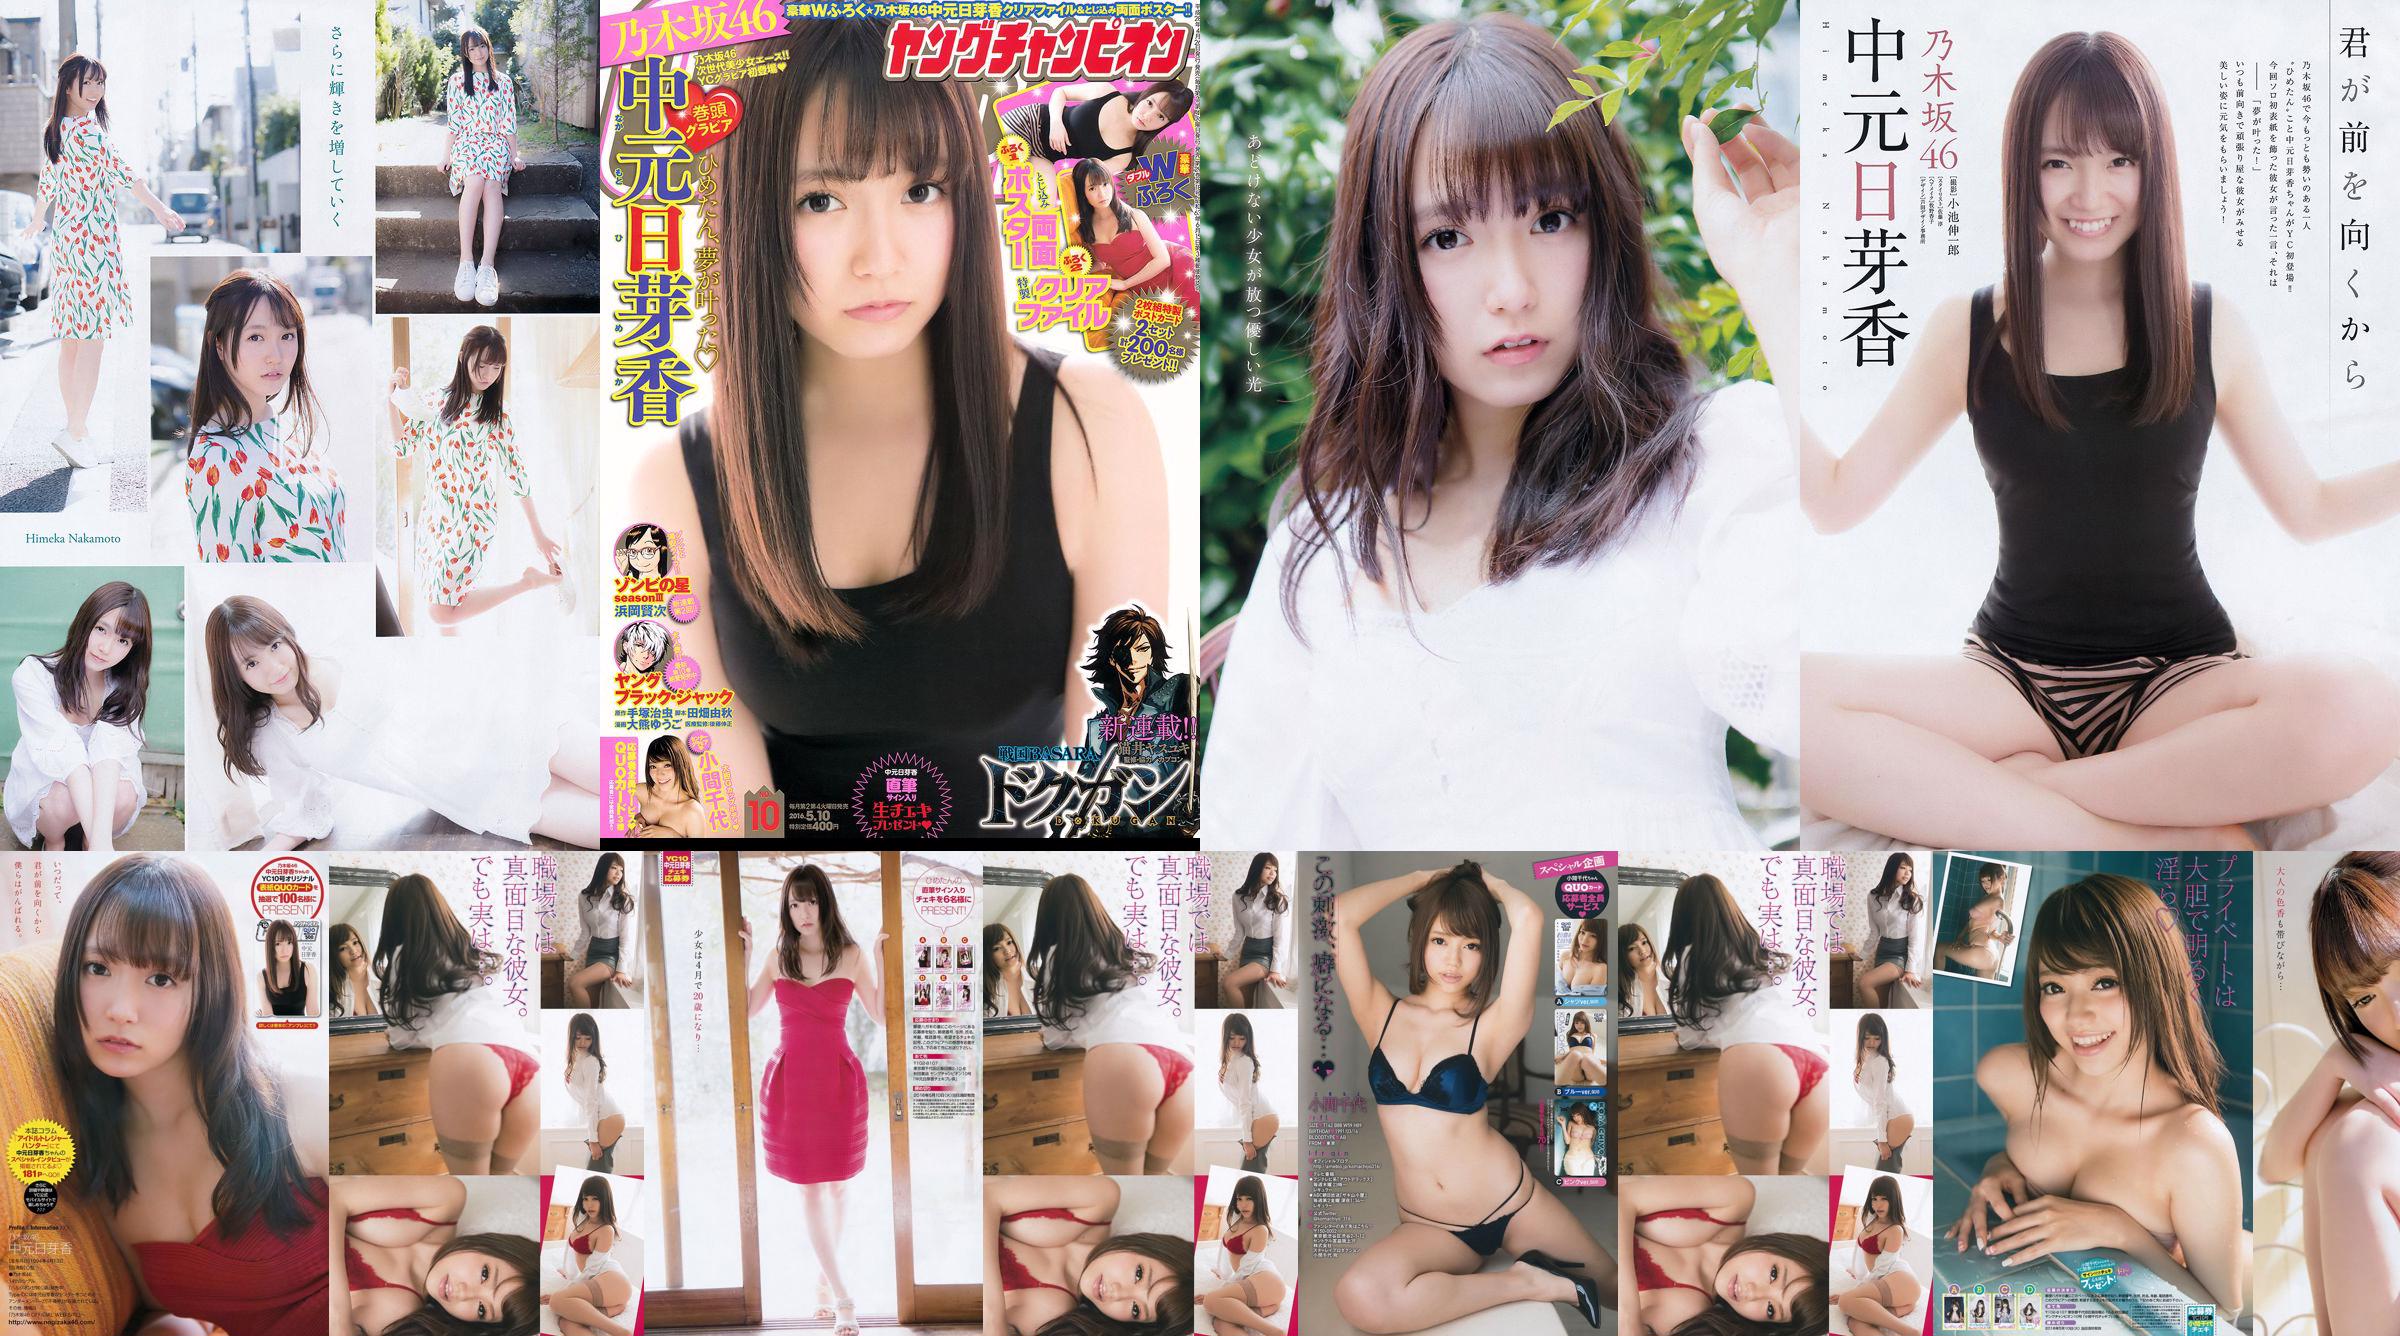 [Jovem campeão] Nakamoto Nichiko Koma Chiyo 2016 No.10 Photo Magazine No.7c619f Página 1